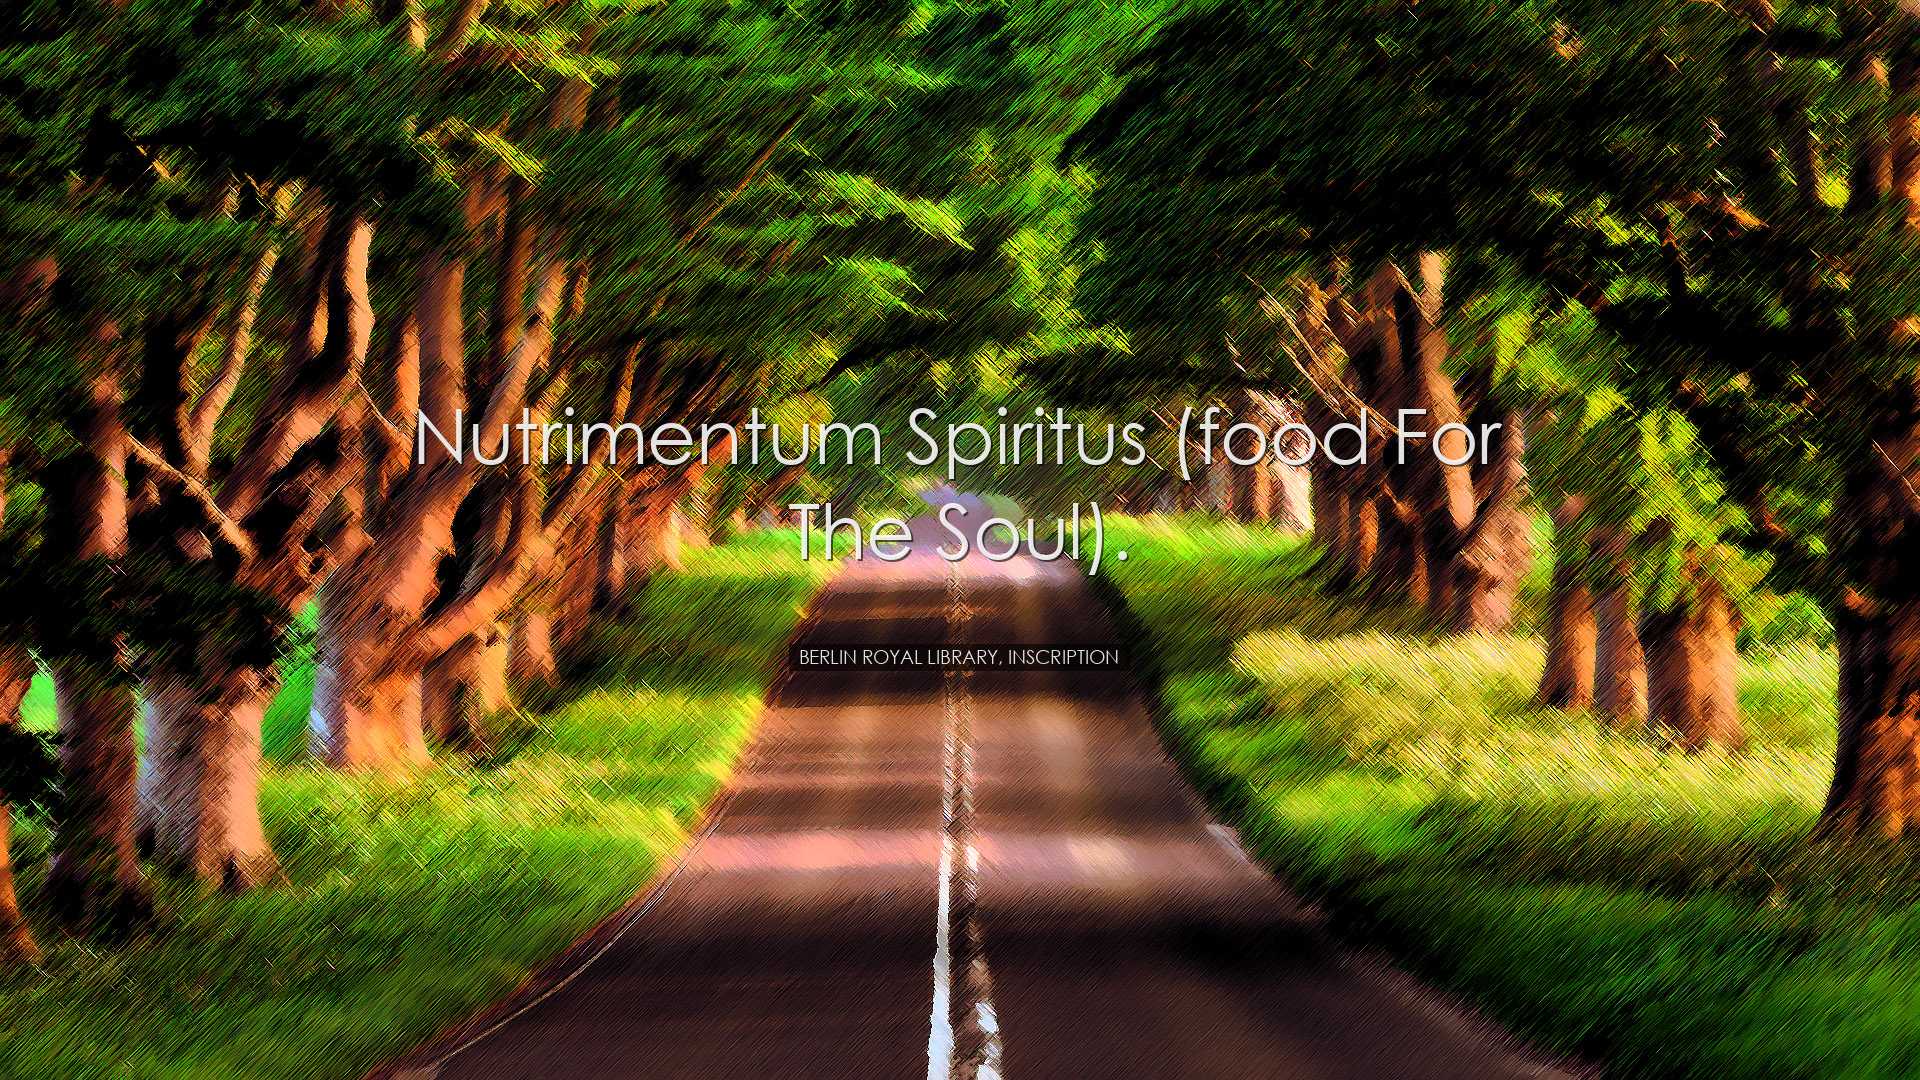 Nutrimentum spiritus (food for the soul). - Berlin Royal Library,